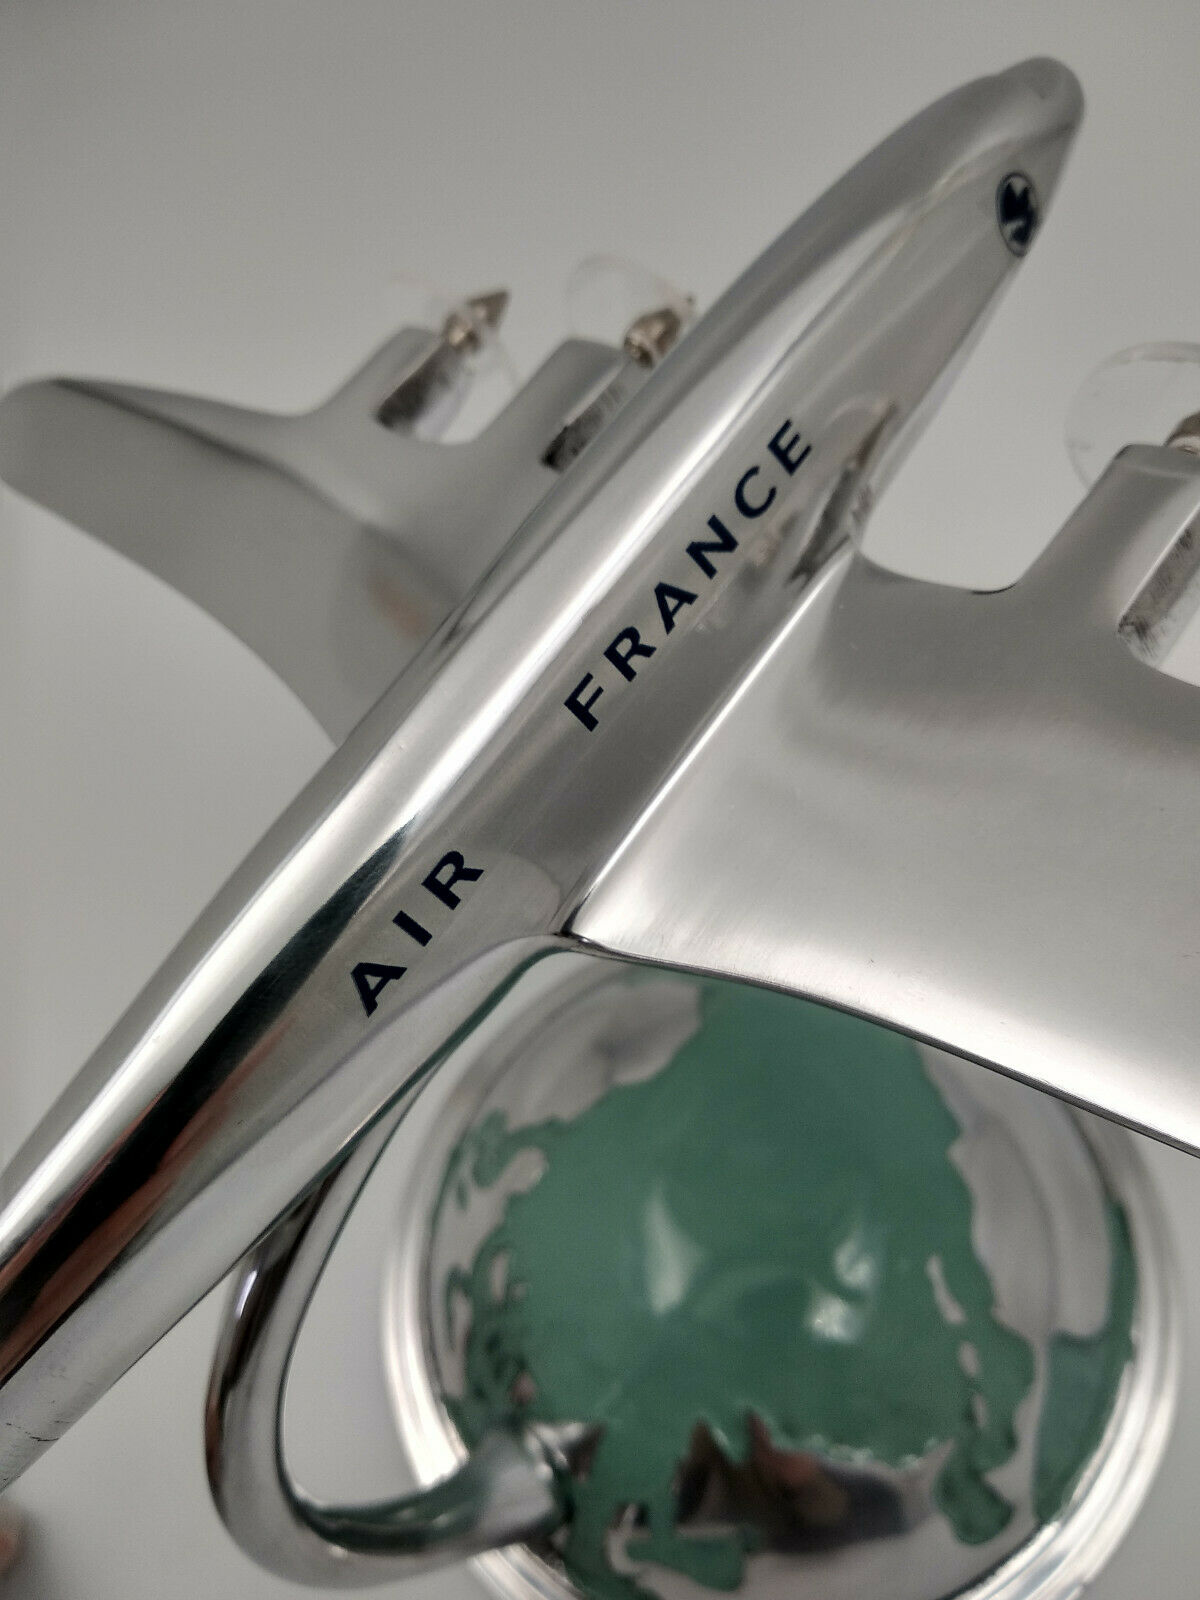 Avion Constellation Air France en aluminium poli sur socle • Ateepique